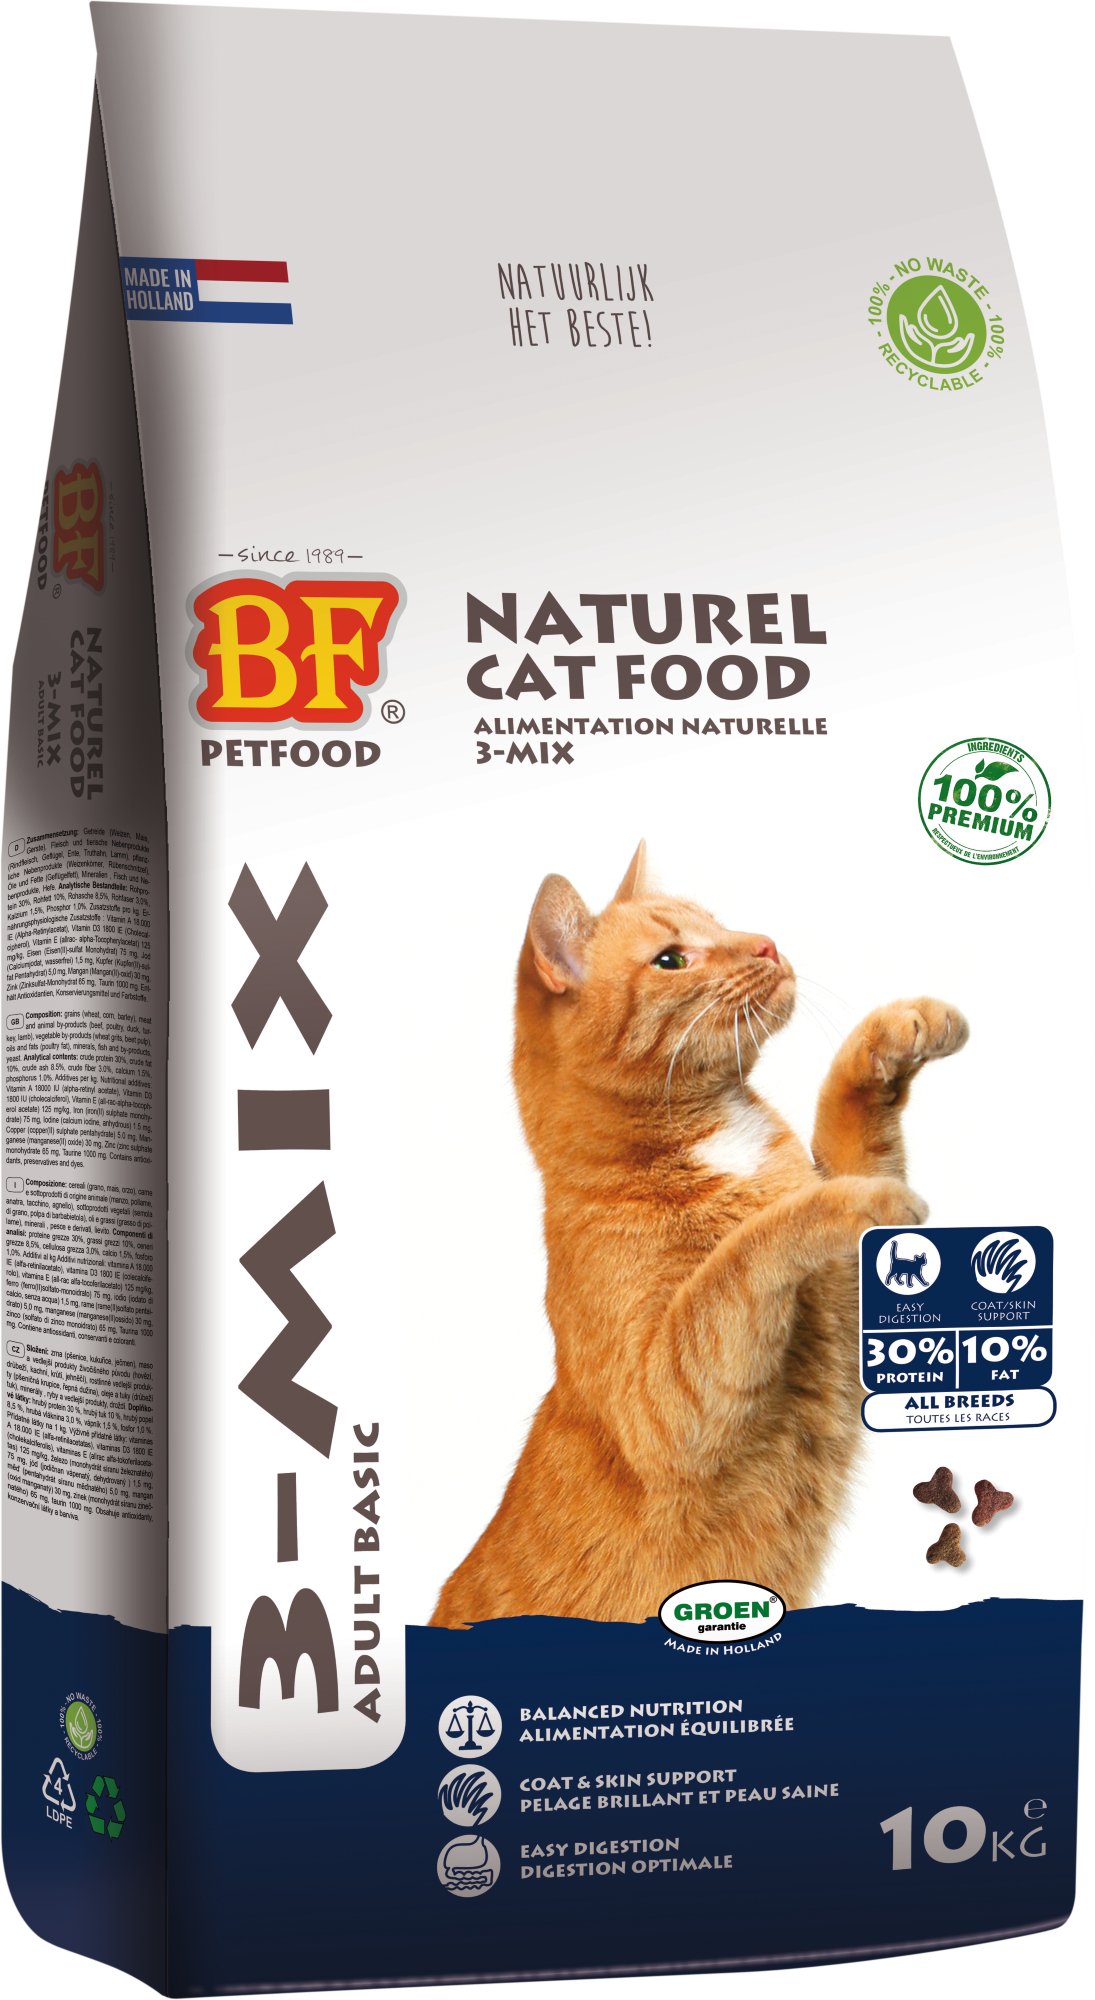 BF PETFOOD - BIOFOOD Croquettes 3-MIX 100% Naturais para Gato Adulto